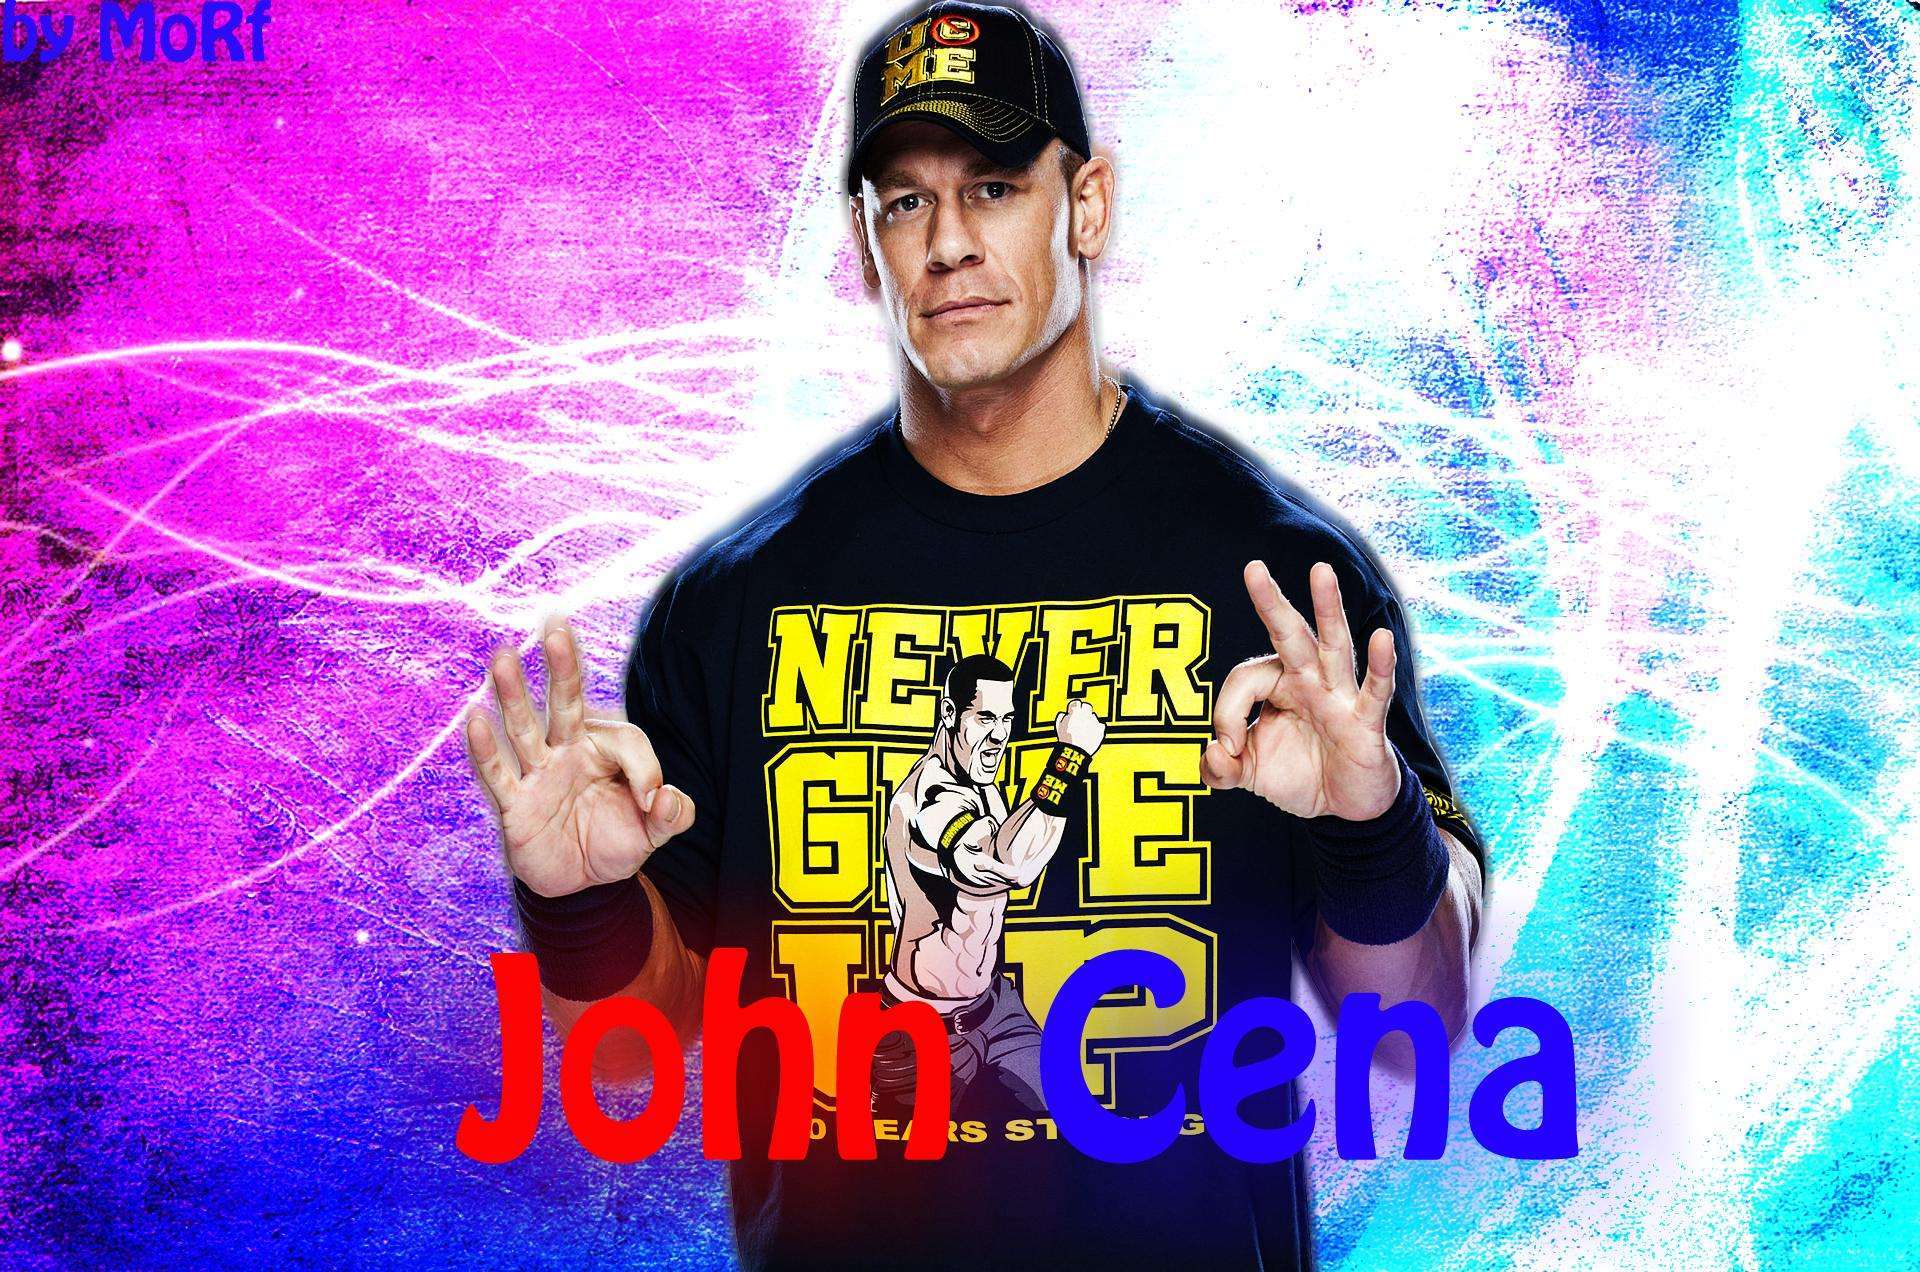 WWE John Cena Wallpapers 2016 HD - Wallpaper Cave